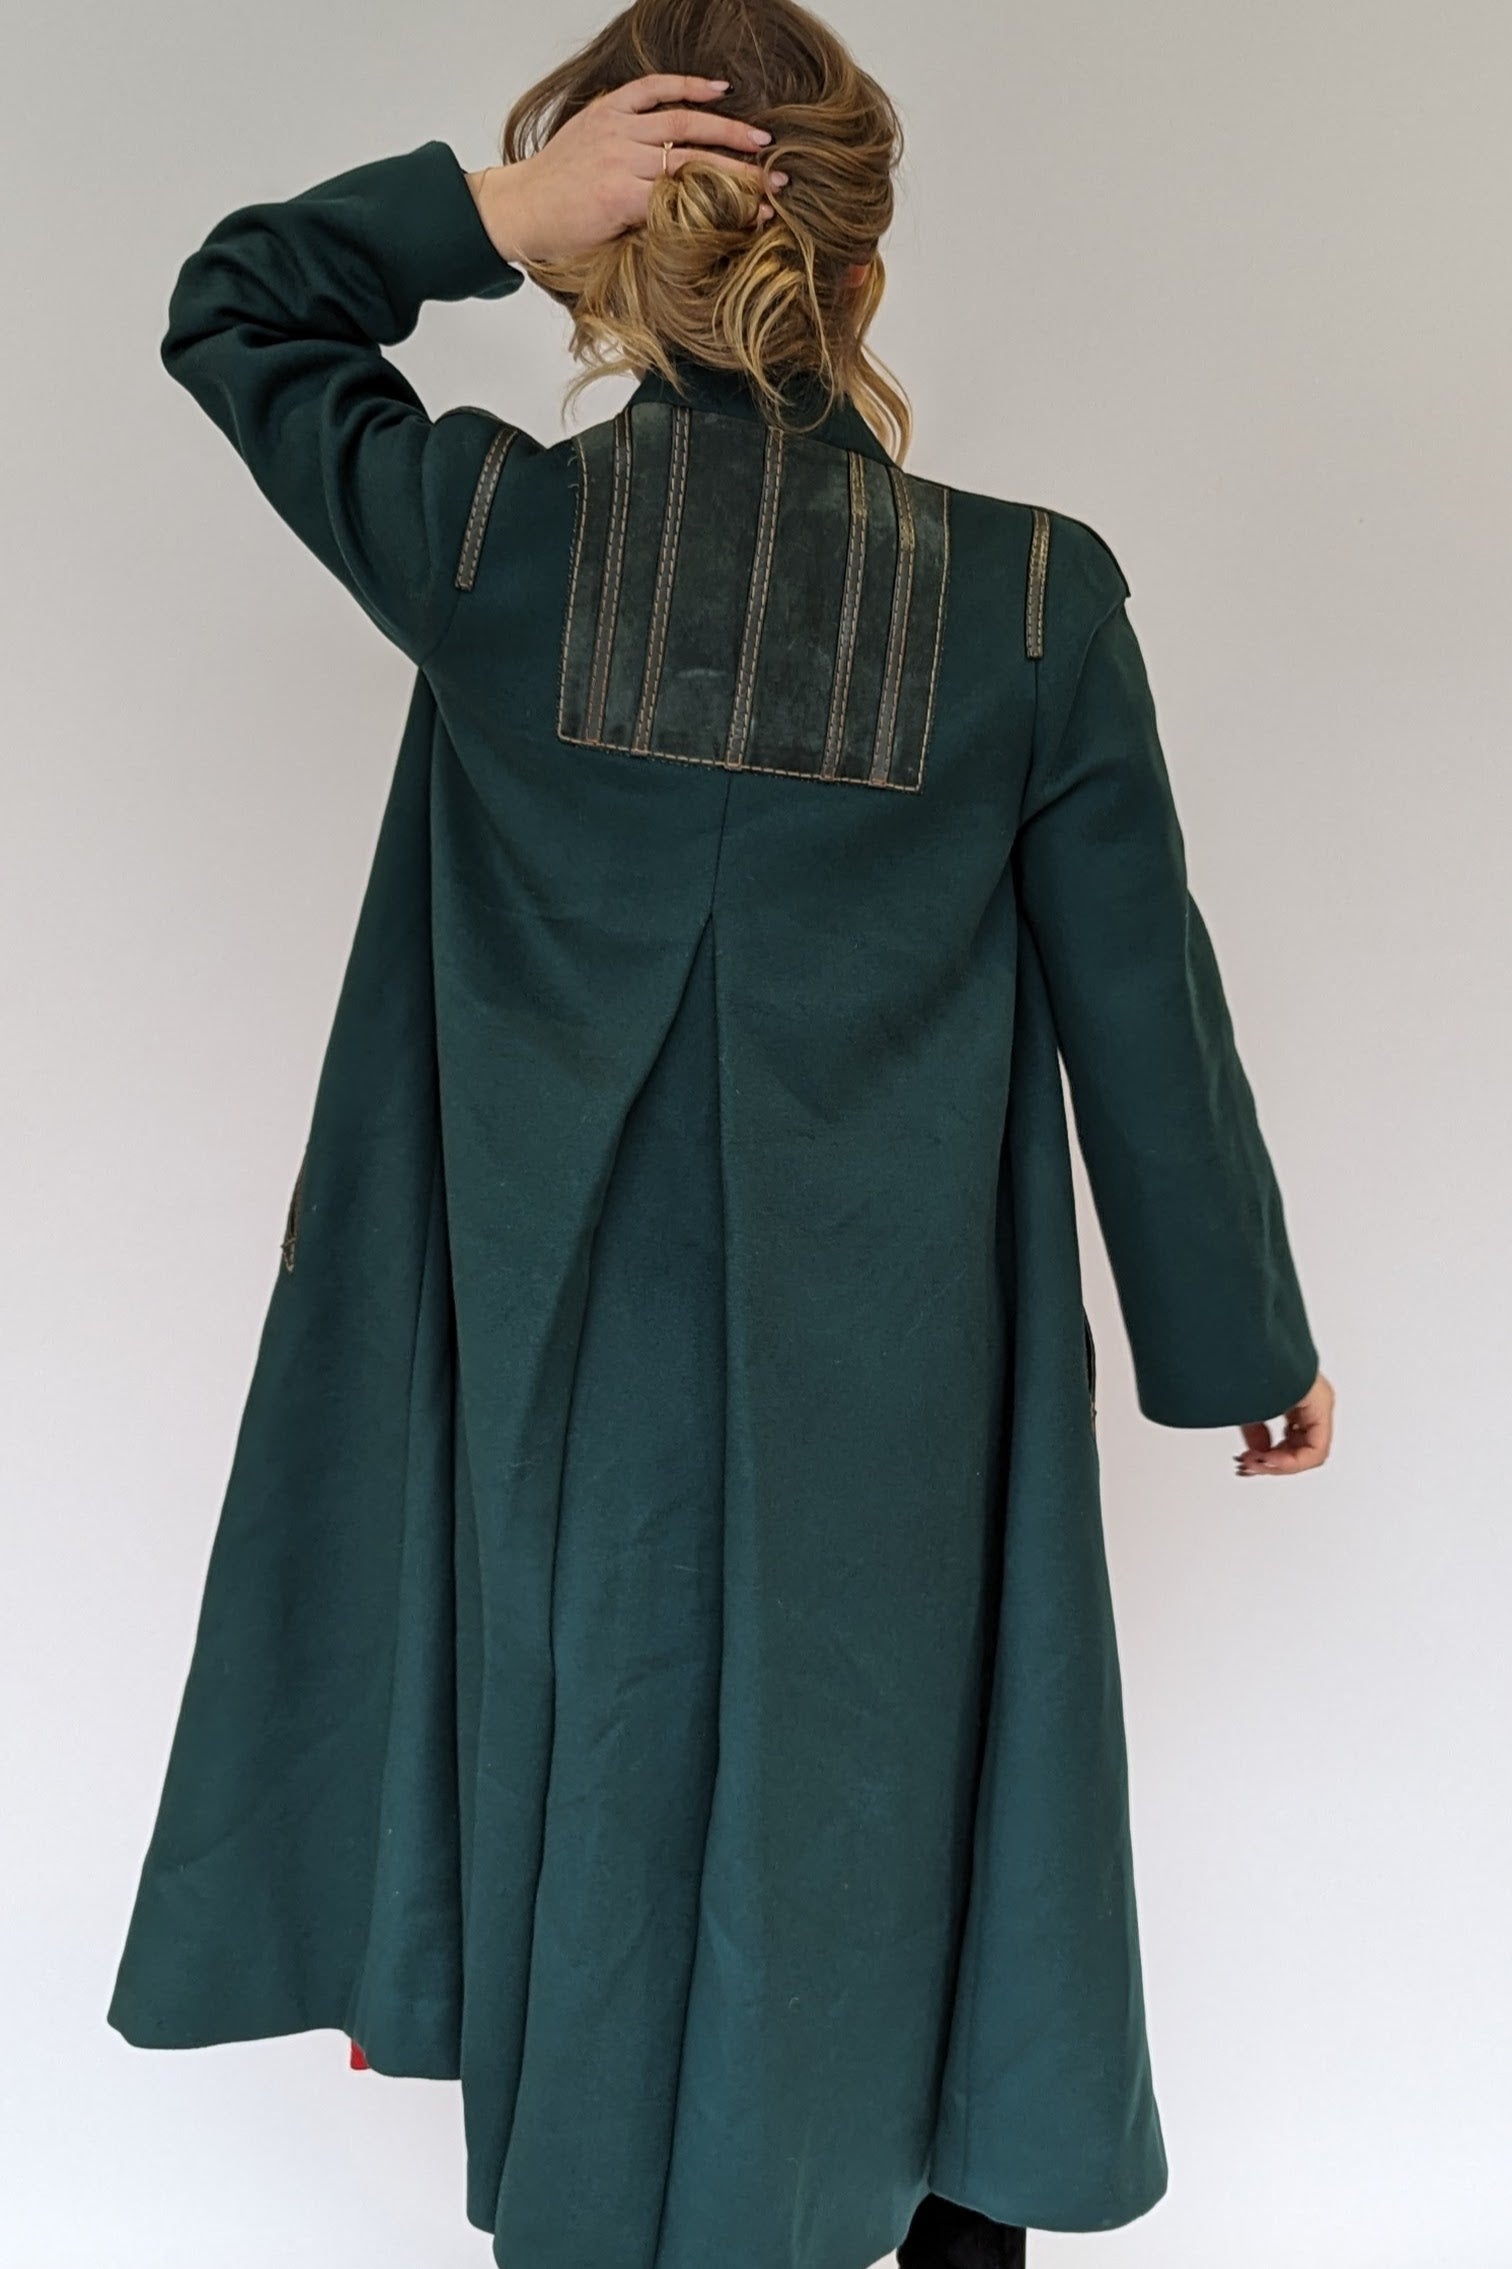 hack of green wool vintage coat with suede panel detail